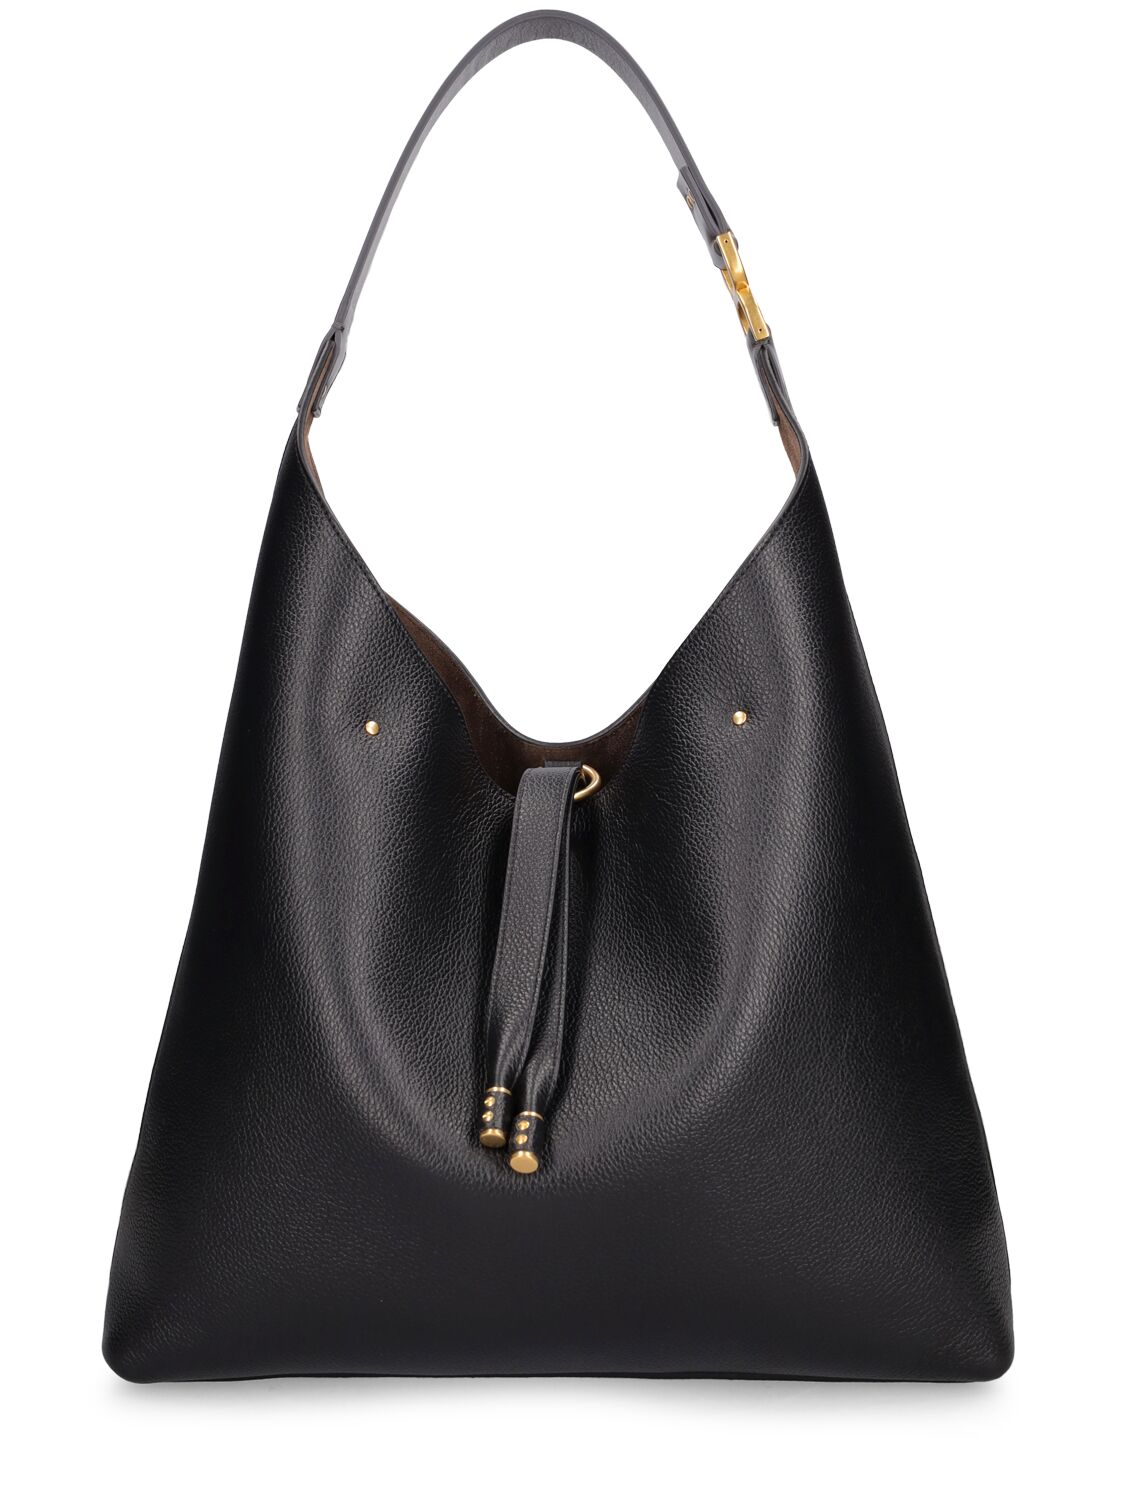 Chloé Marcie Leather Tote Bag In Black